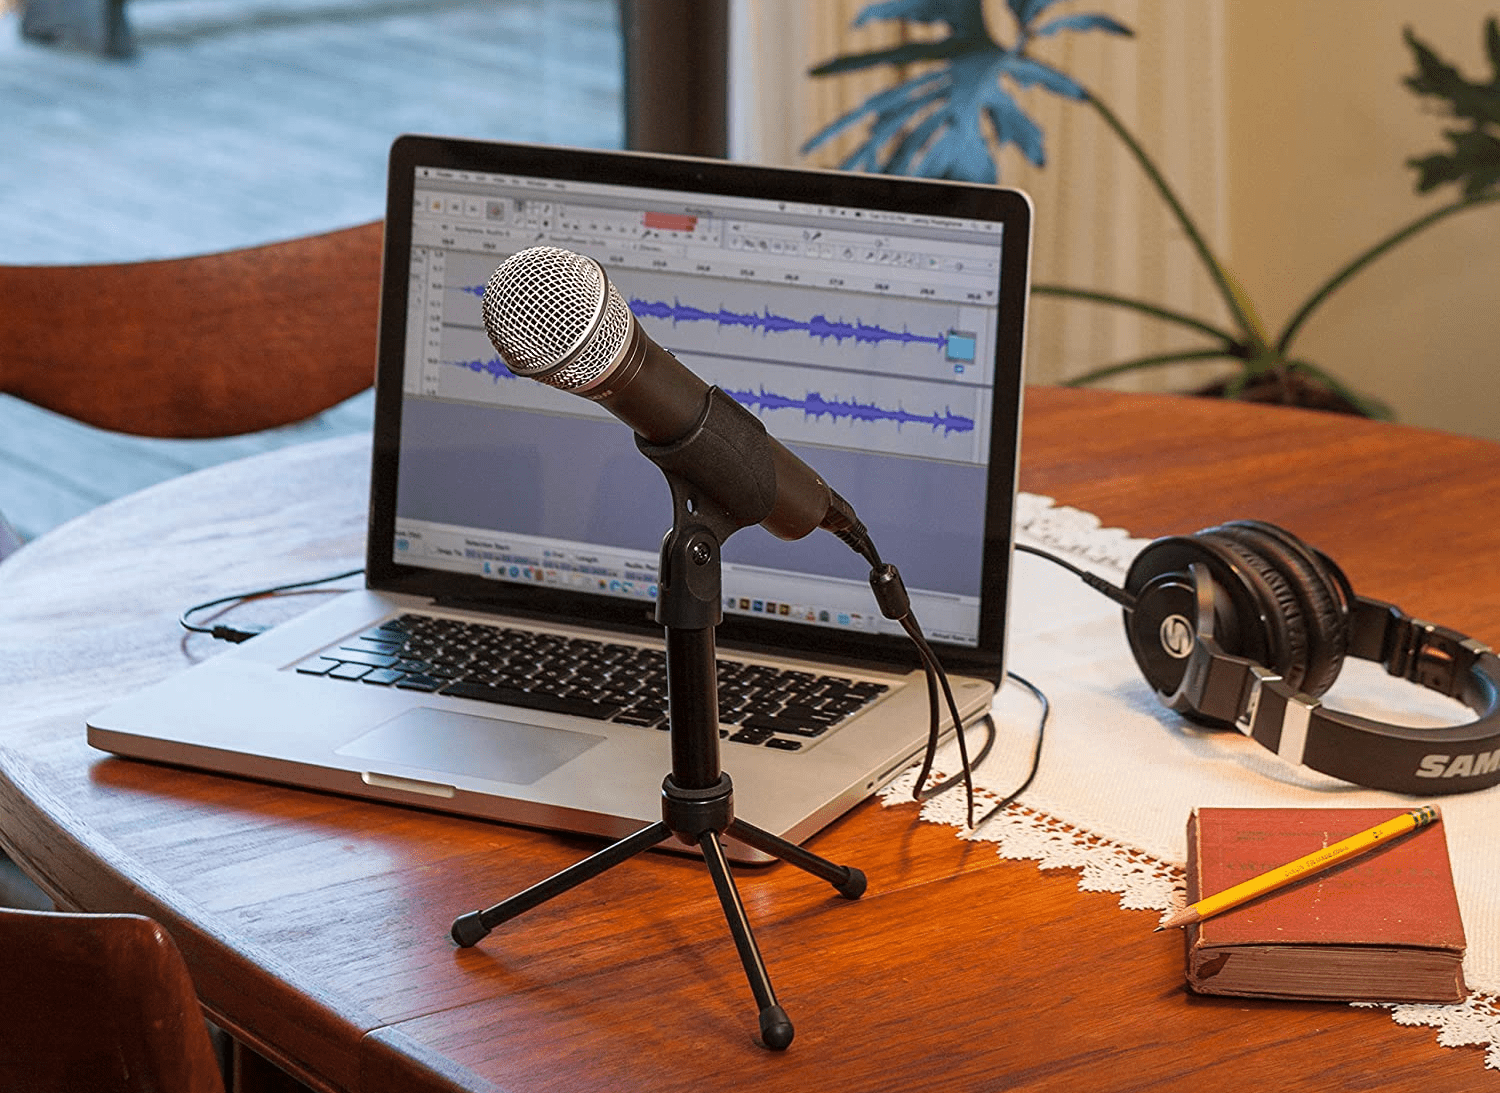 SAMSON Q2U USB+XLR Recording Podcast Dynamic Microphone+Audio Technica Boom  Arm